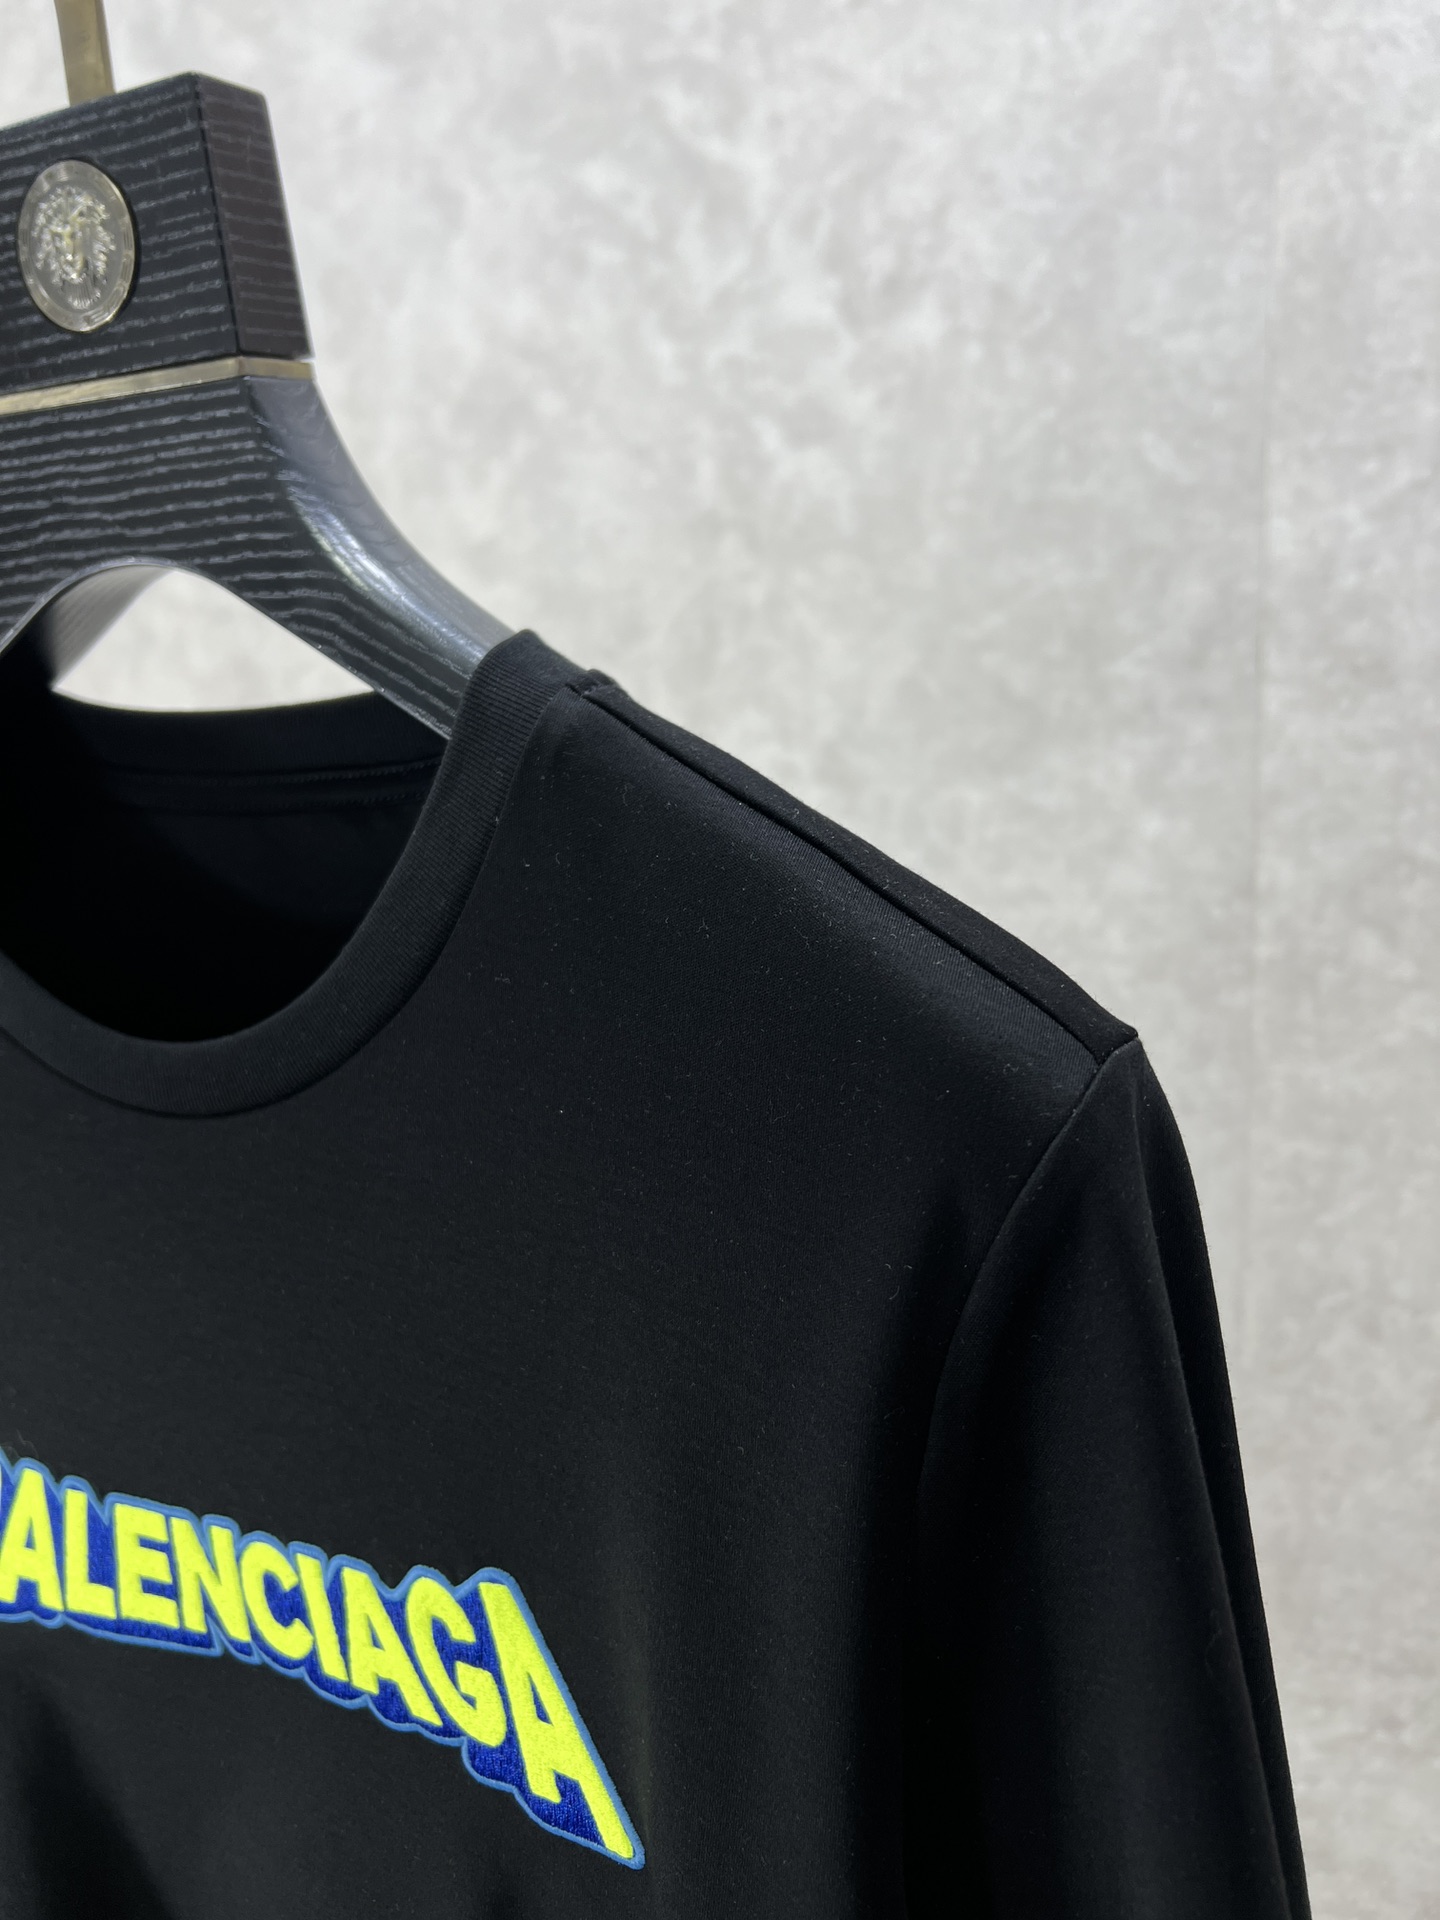 Balenciaga巴黎世家2024ss最新款圆领短袖T恤上身效果面料重工印花定制定染螺纹领口不易变形手